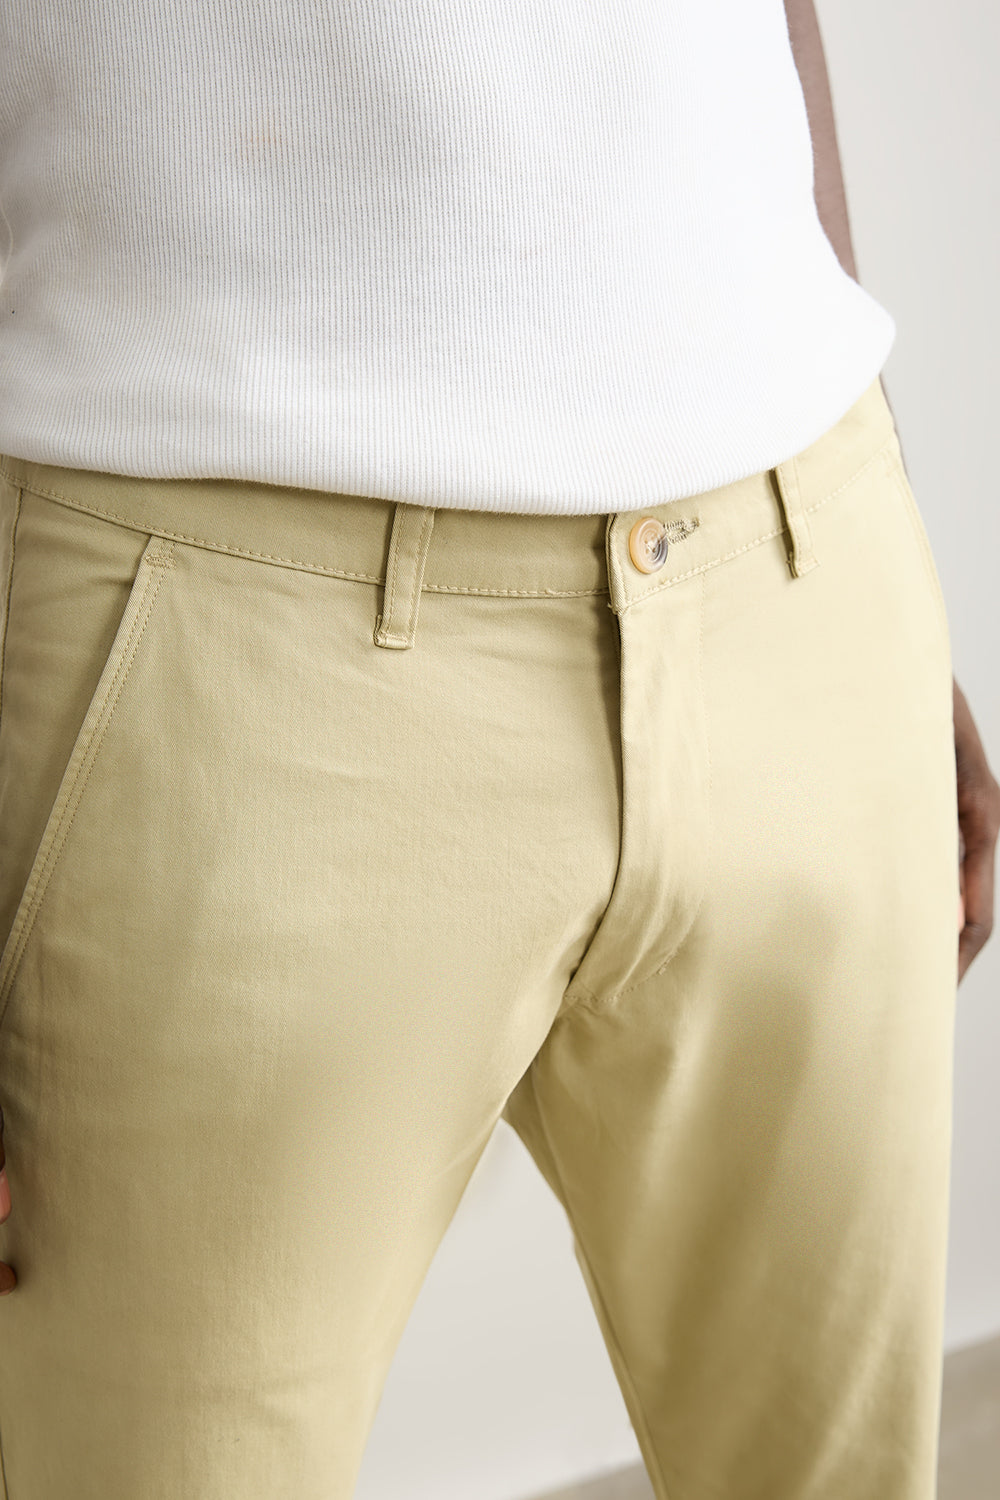 Men's Mint Green Summer Pants